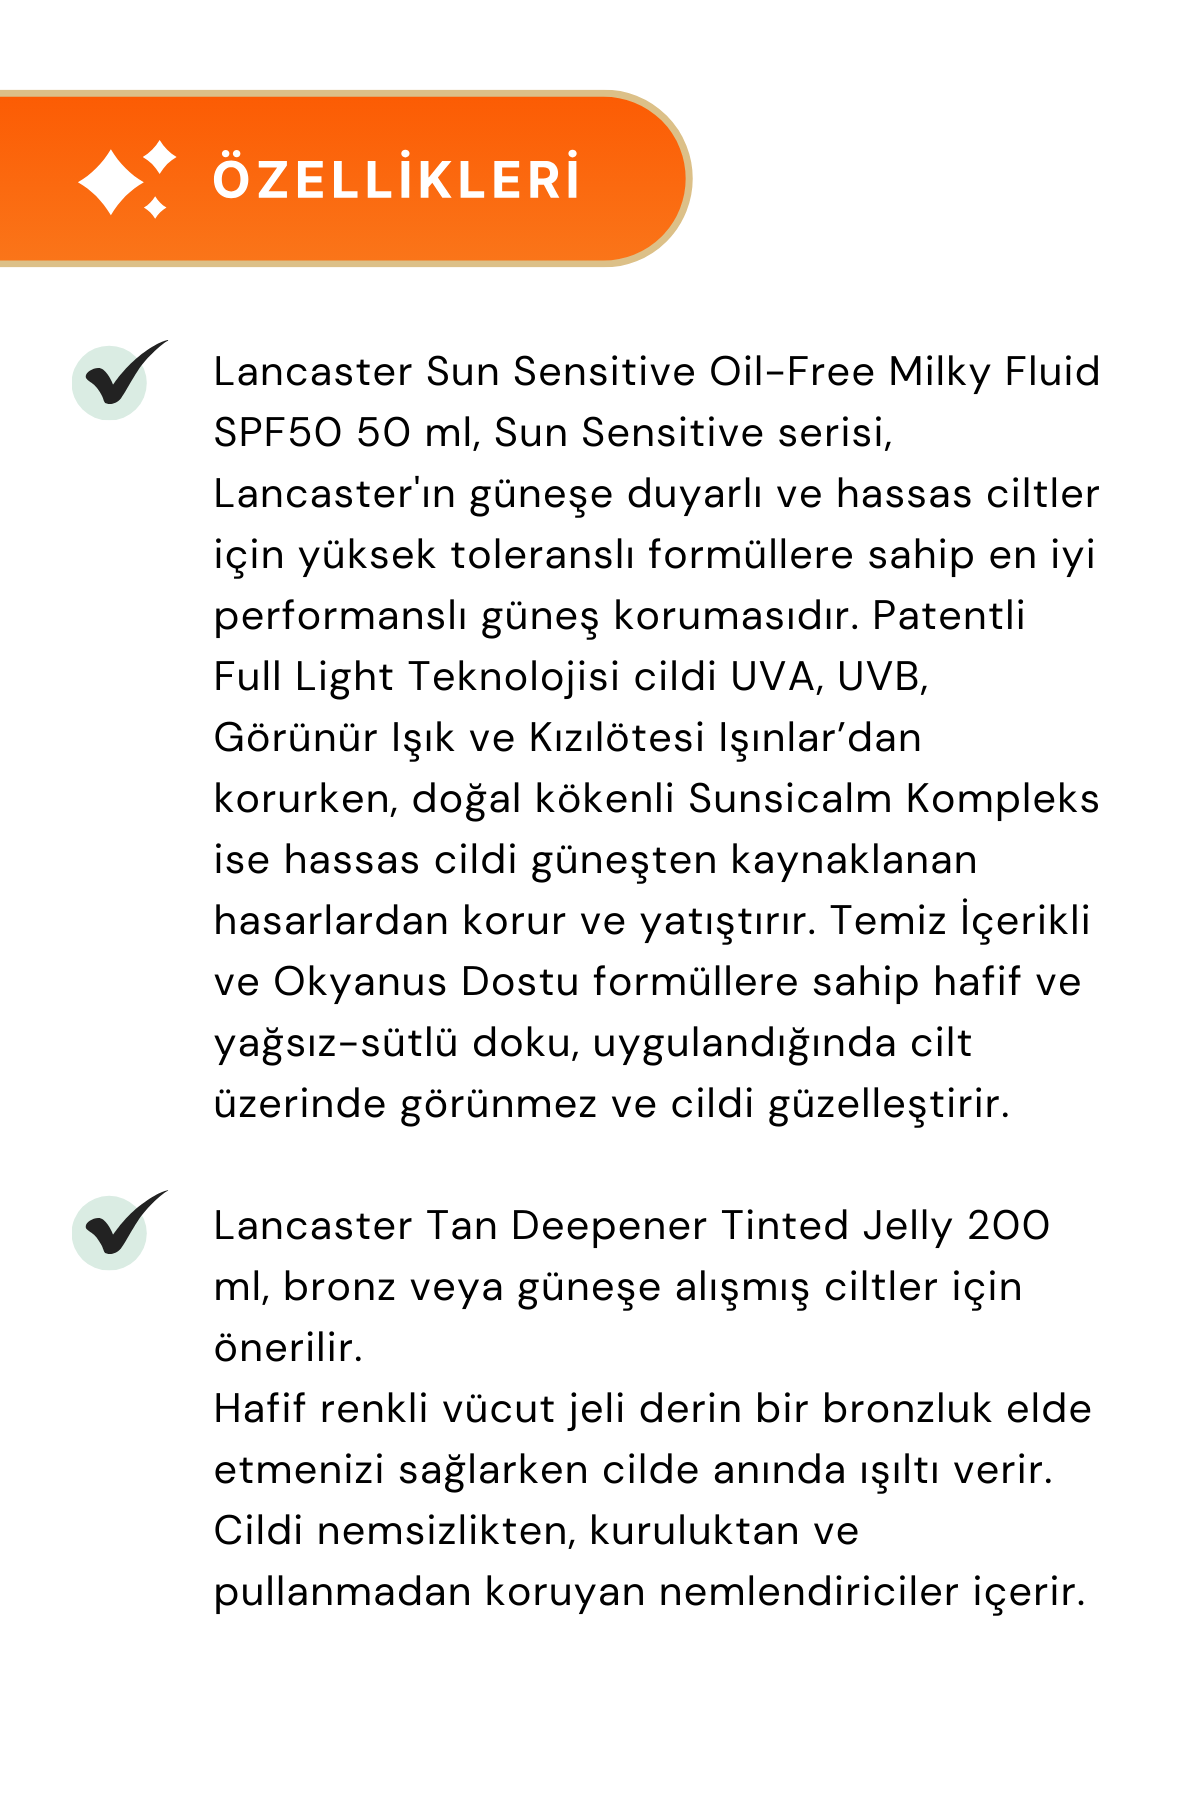 Lancaster Sun Sensitive Oil-Free Milky Fluid SPF50 50 ml & Tan Deepener Tinted Jelly 200 ml